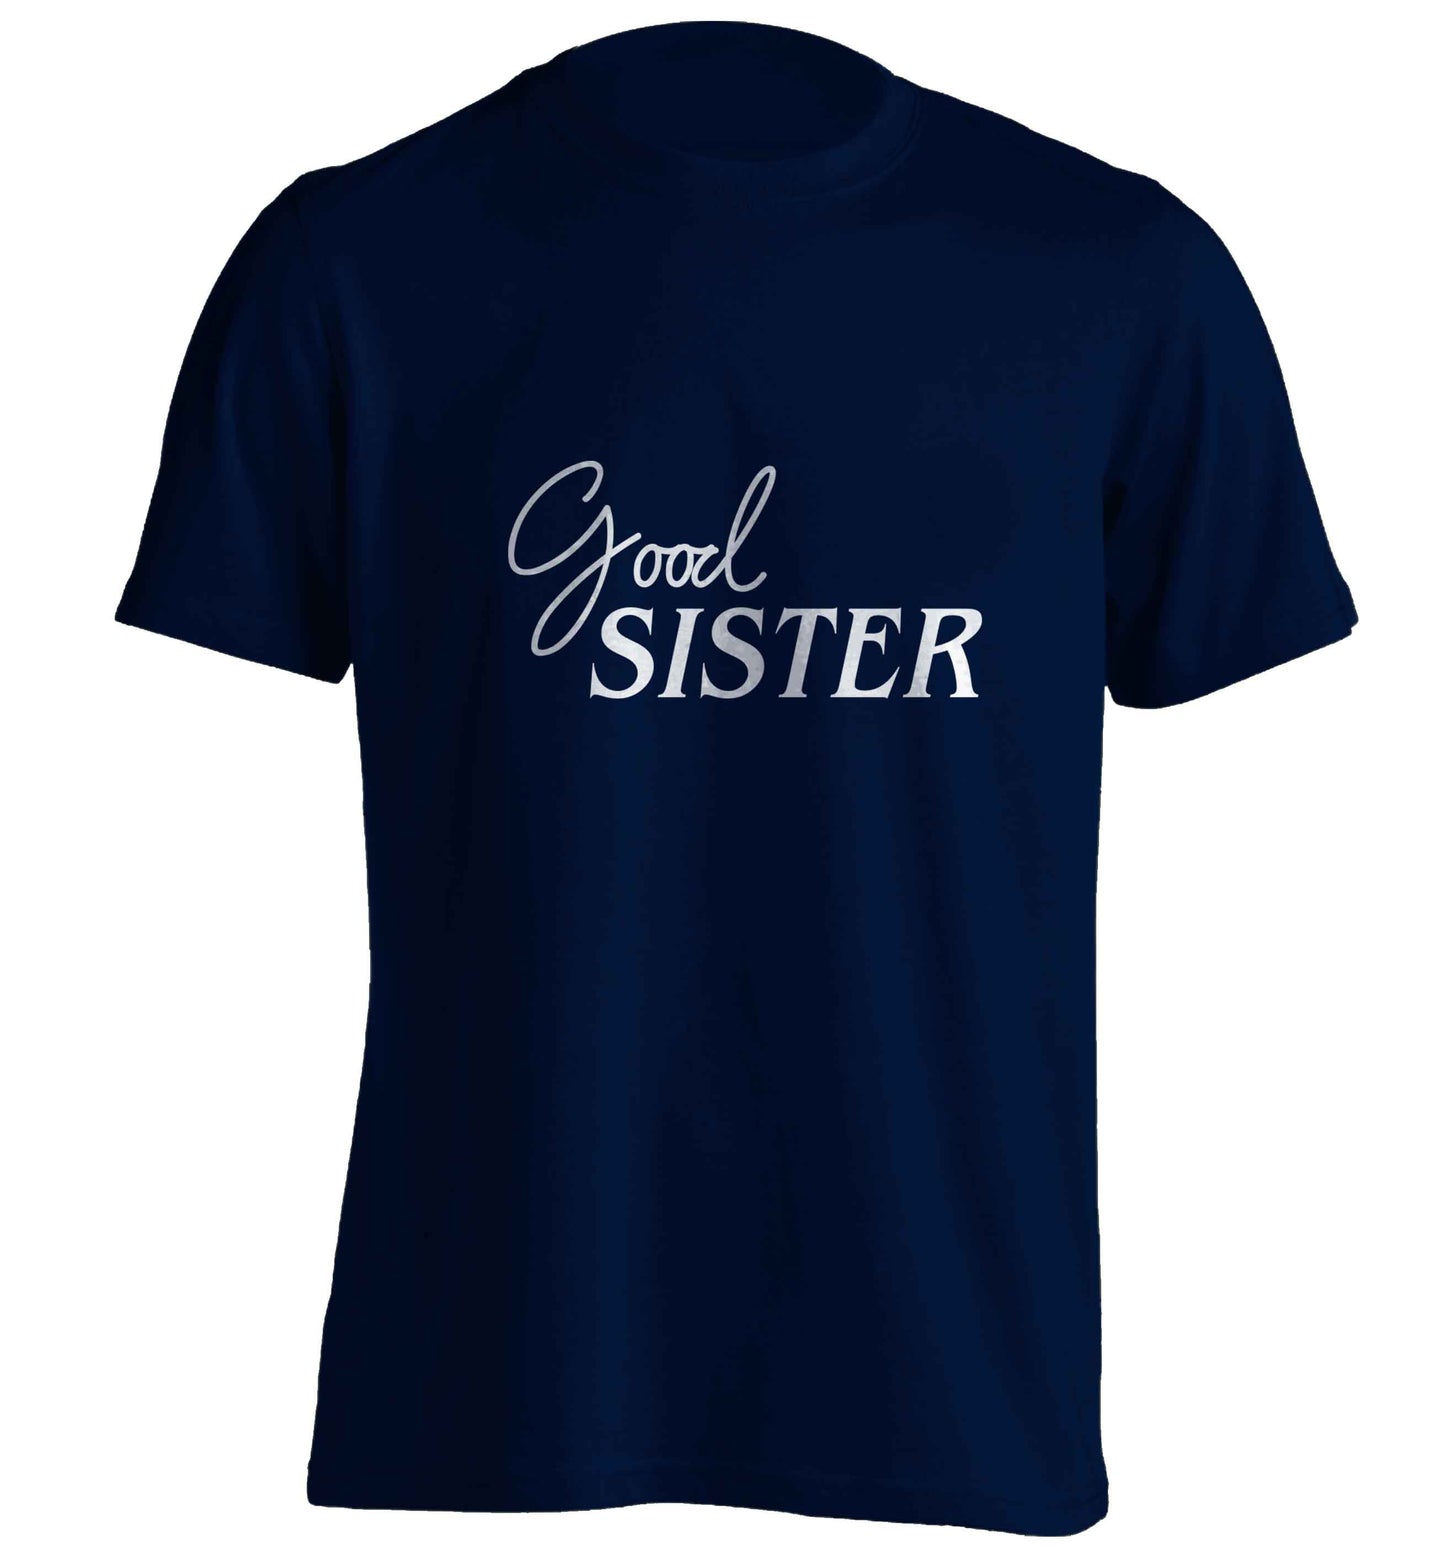 Good sister adults unisex navy Tshirt 2XL